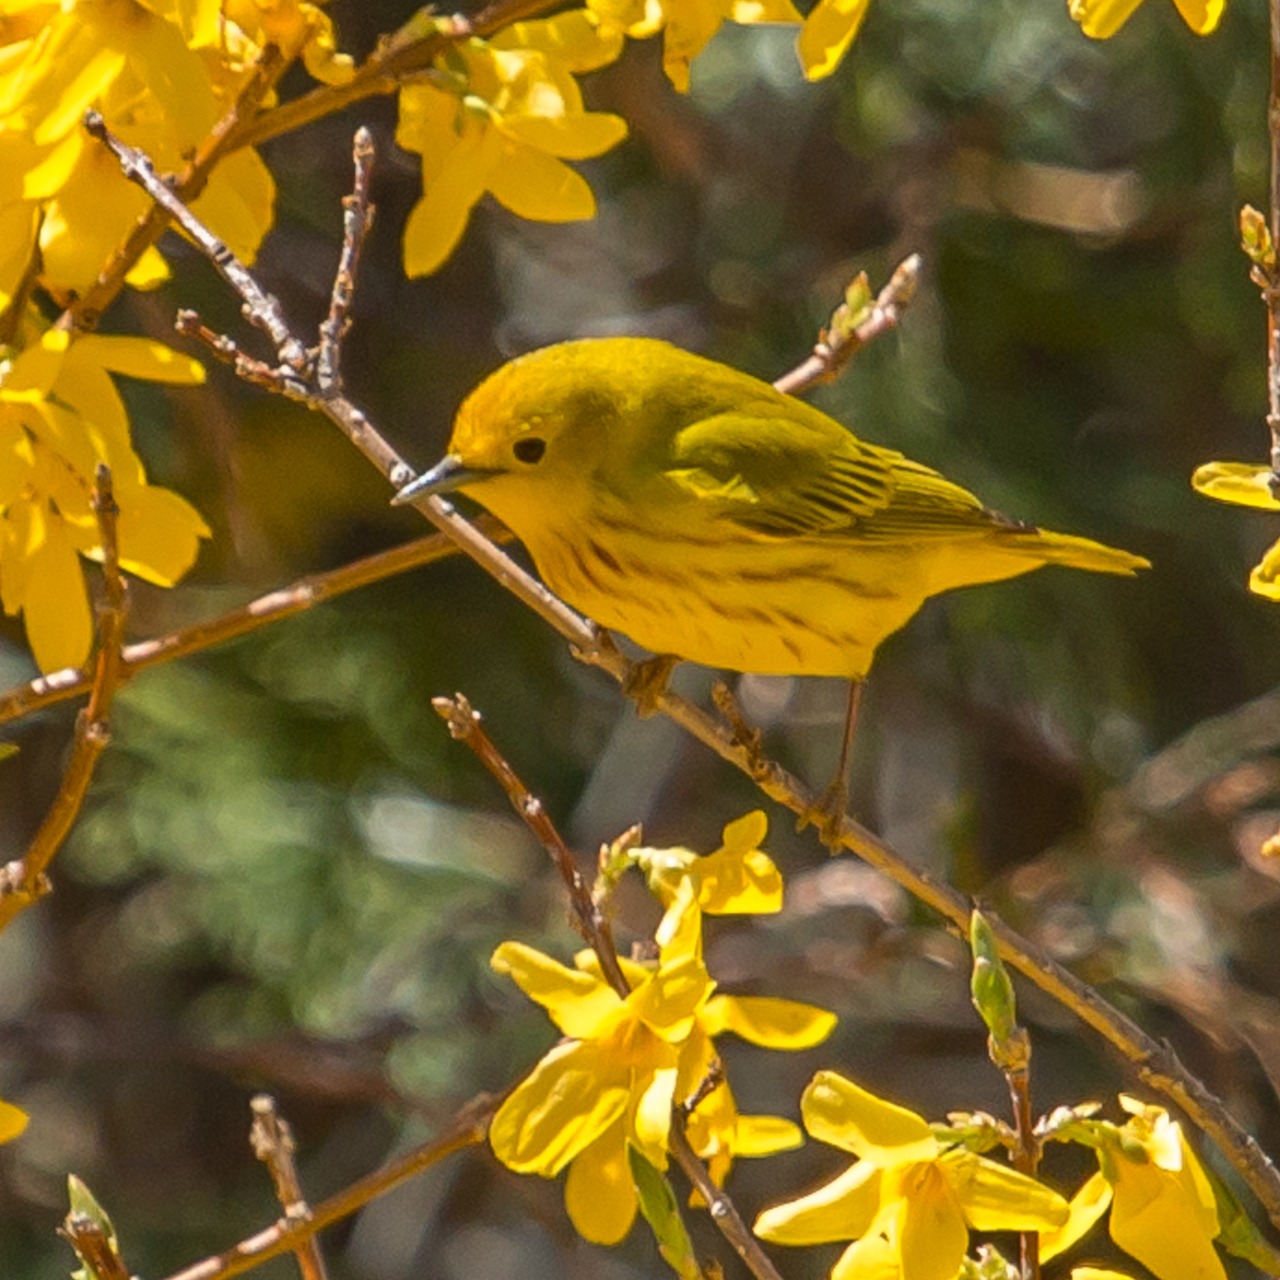 Yellow bird in a forsythia bush in bloom